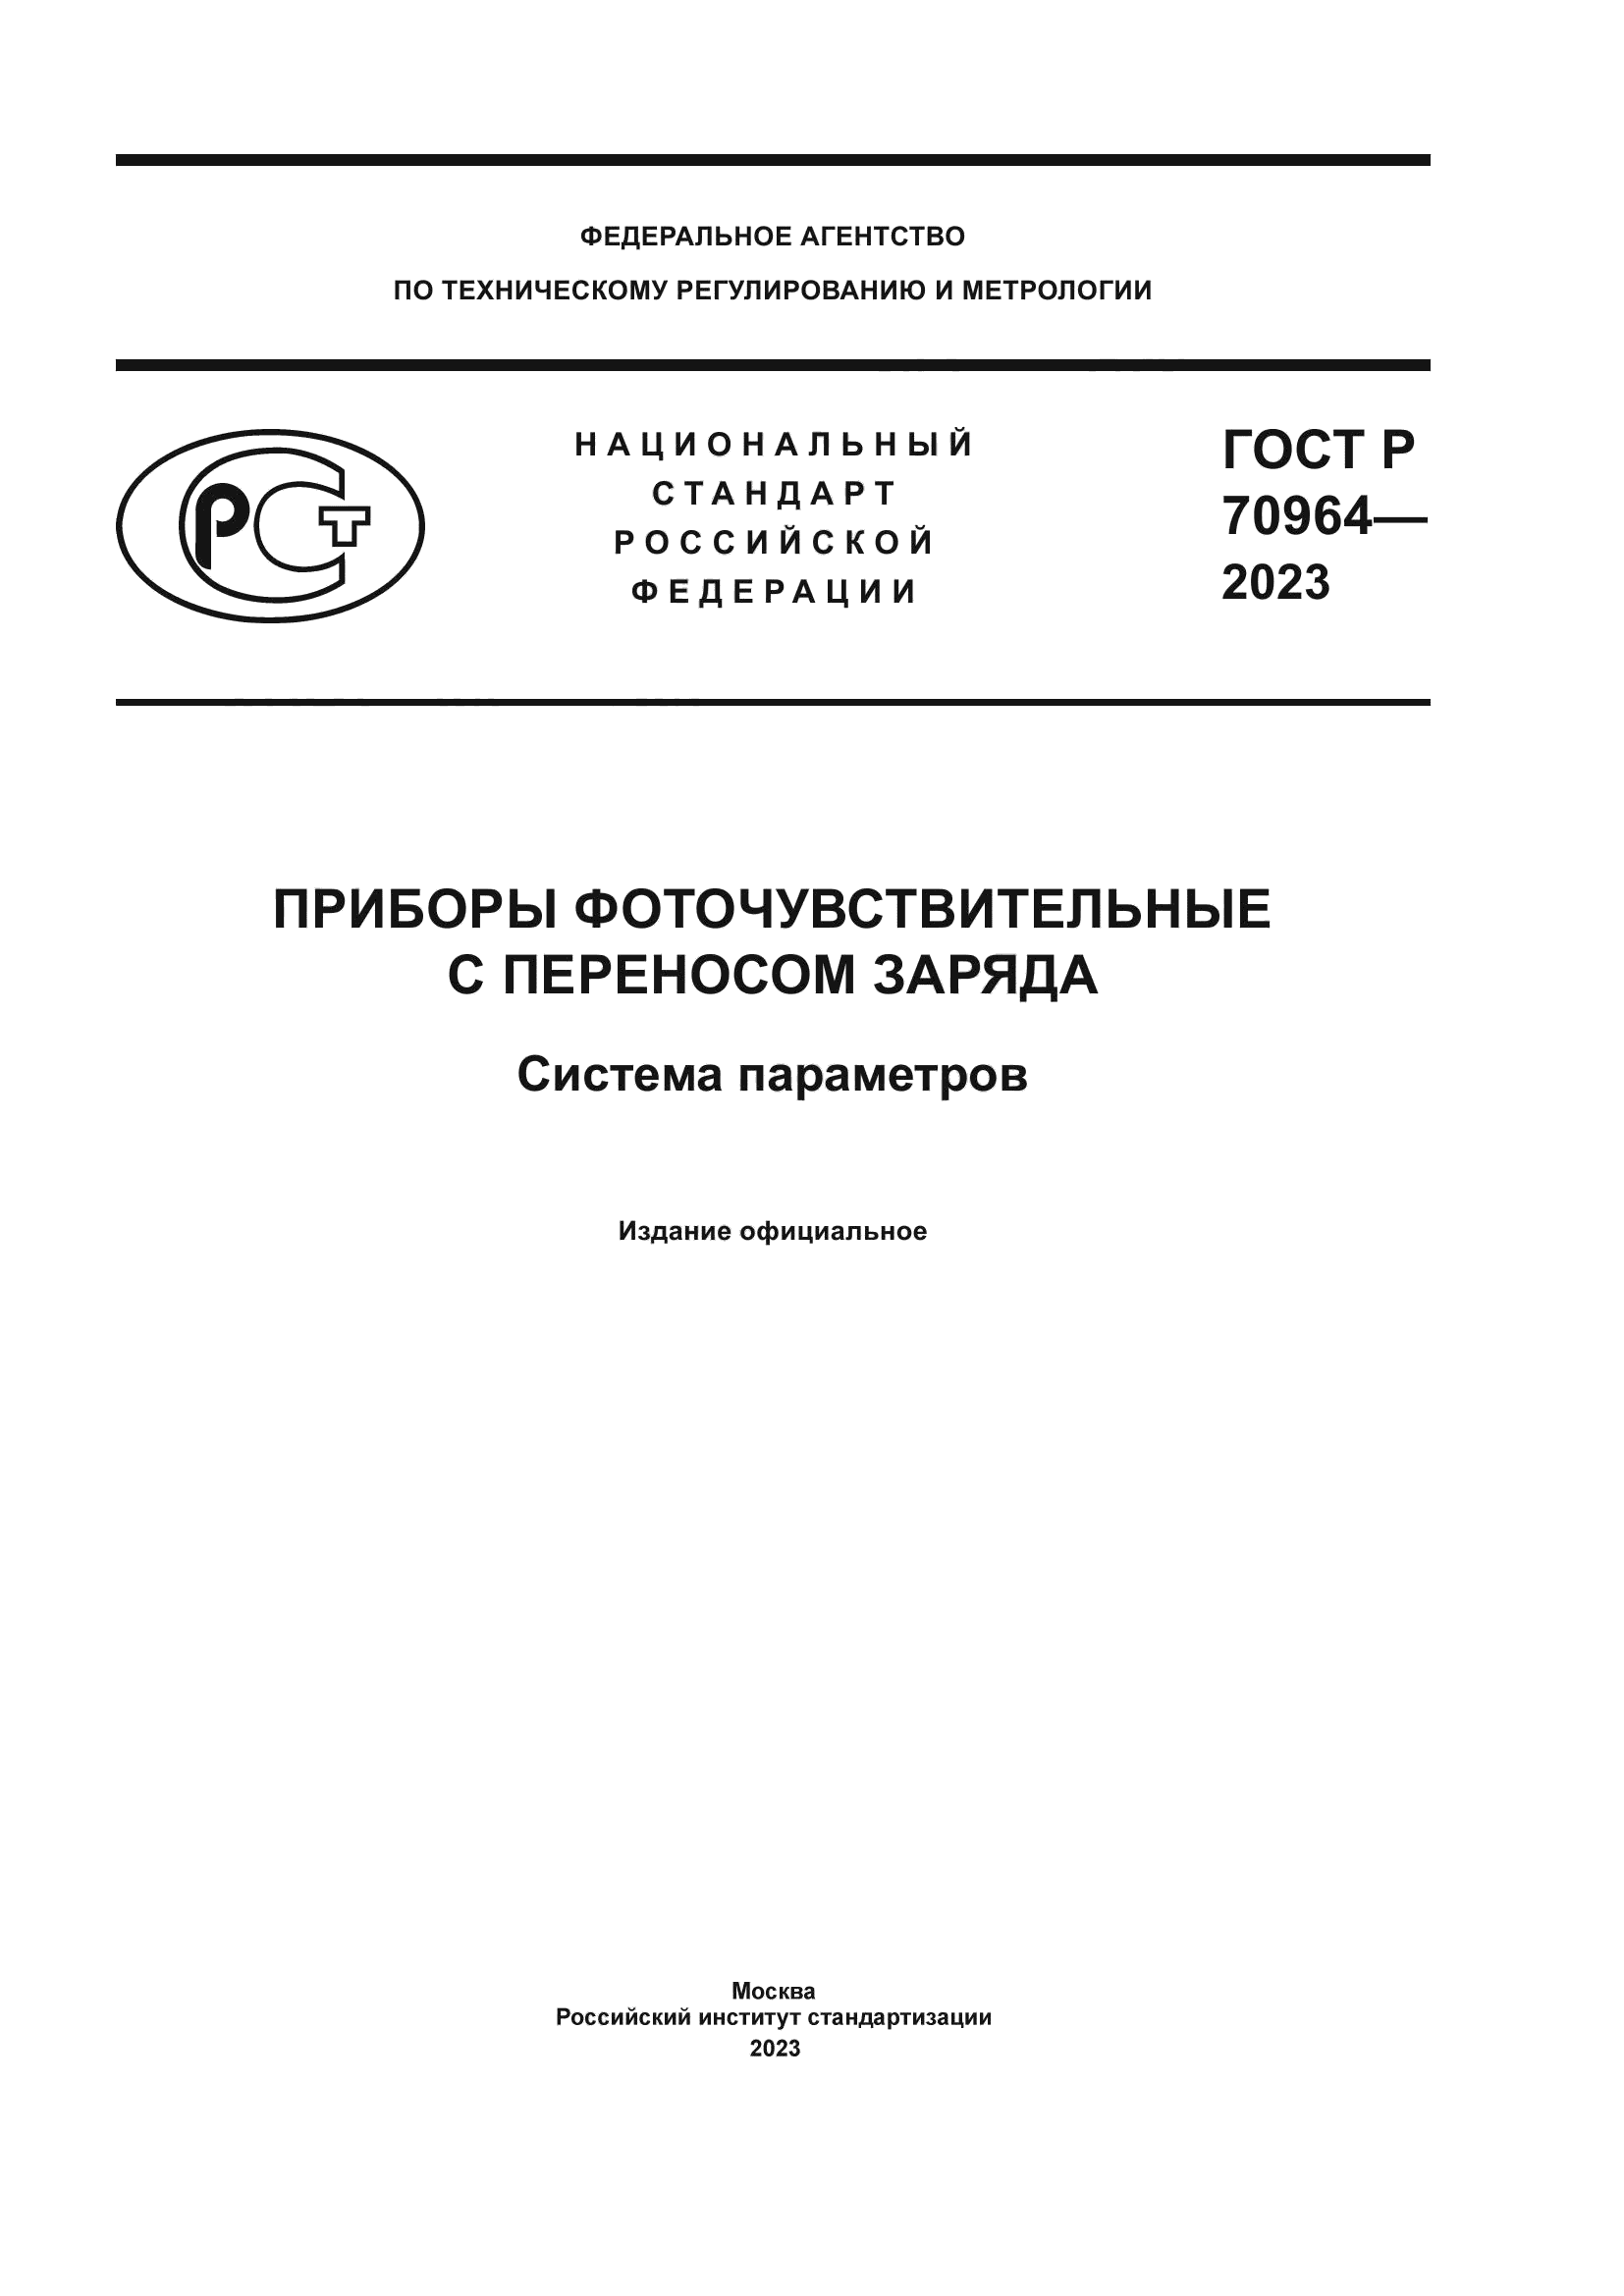 ГОСТ Р 70964-2023